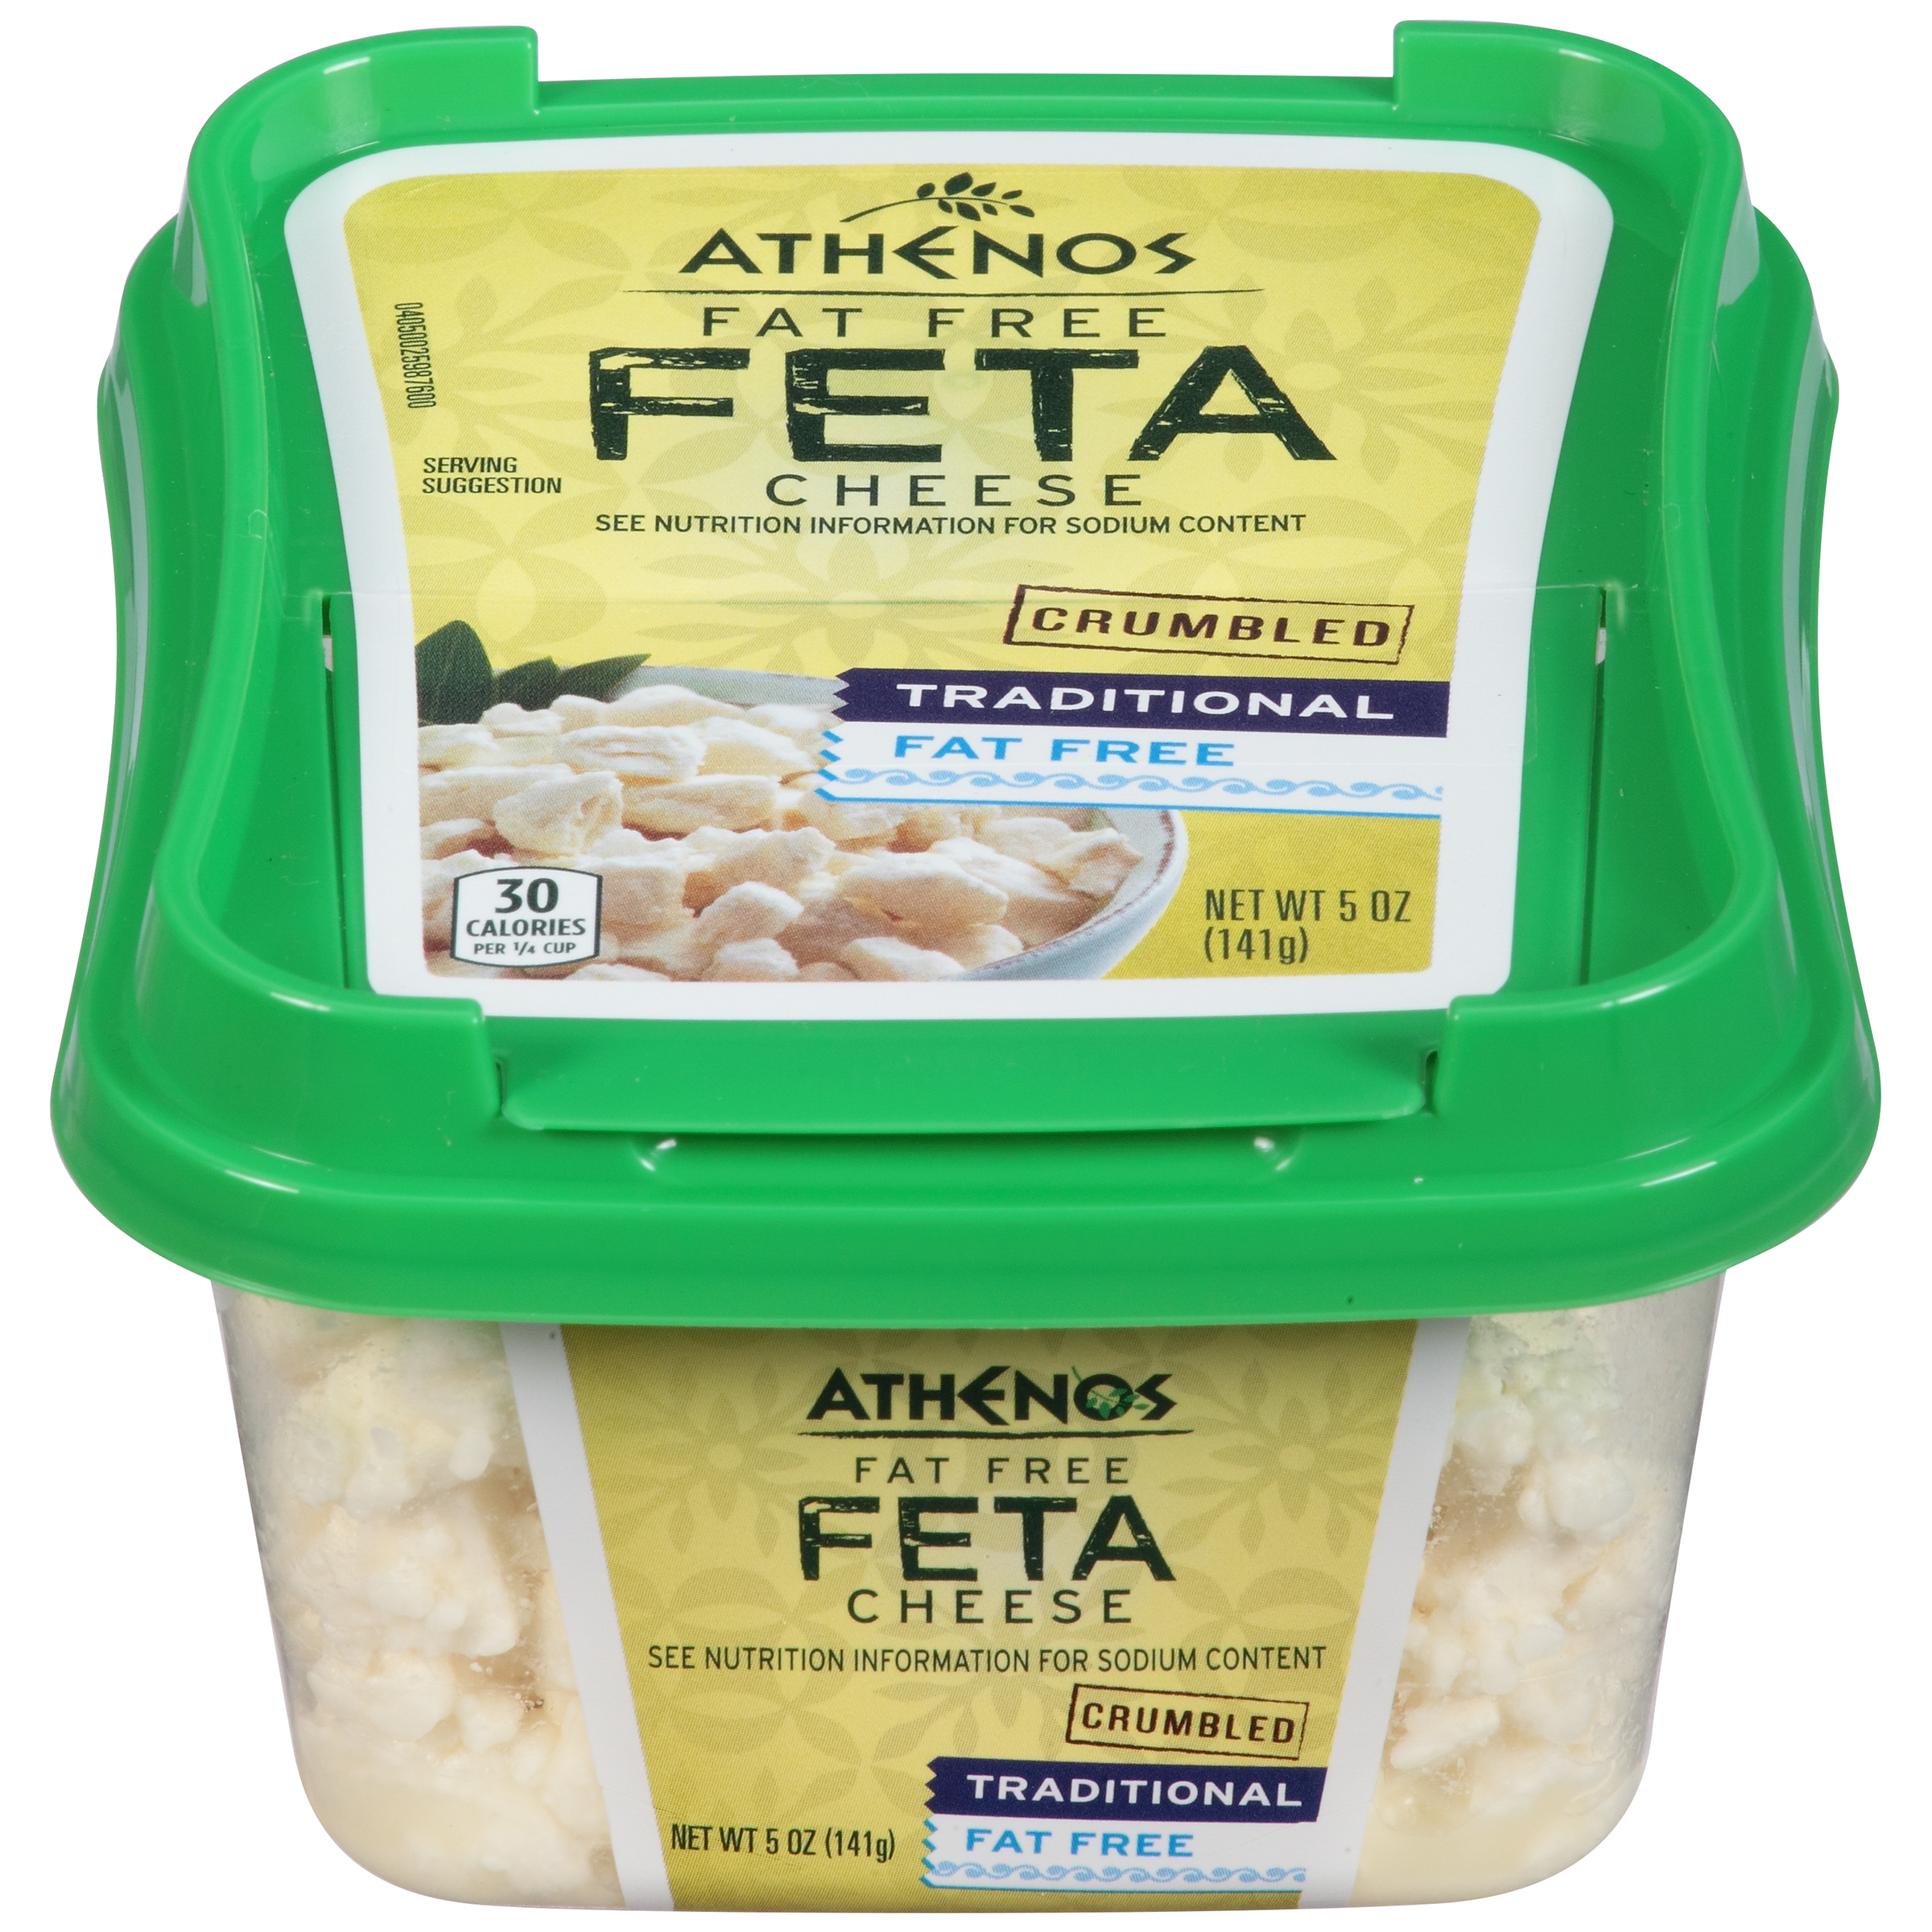 Athenos More Products - Fat Free Feta